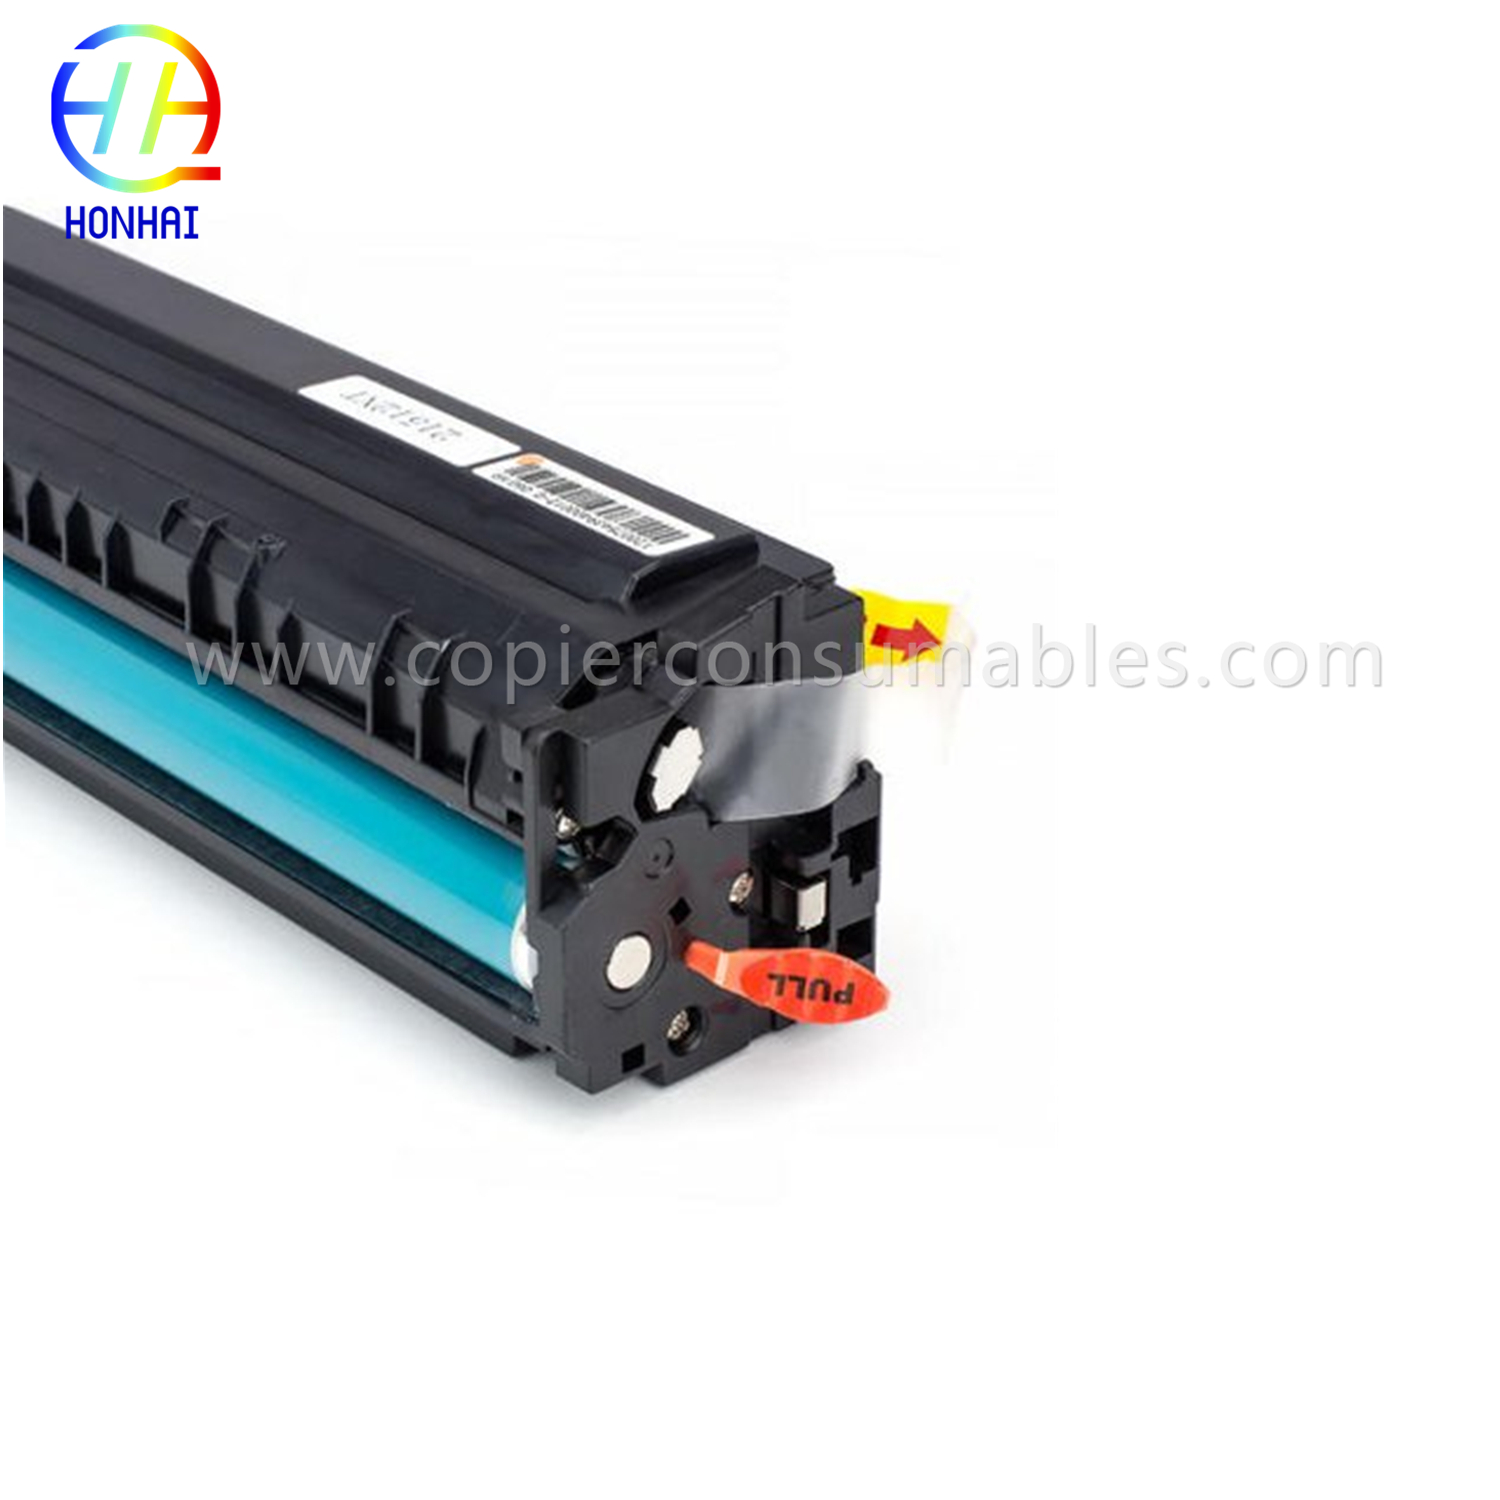 Toner Cartridge for HP Color Laserjet PRO M452DN M452dw M452nw Mfp M377dw Mfp M477fdn Mfp M477fdw Mfp M477fnw (CF410A CF413A) (2)